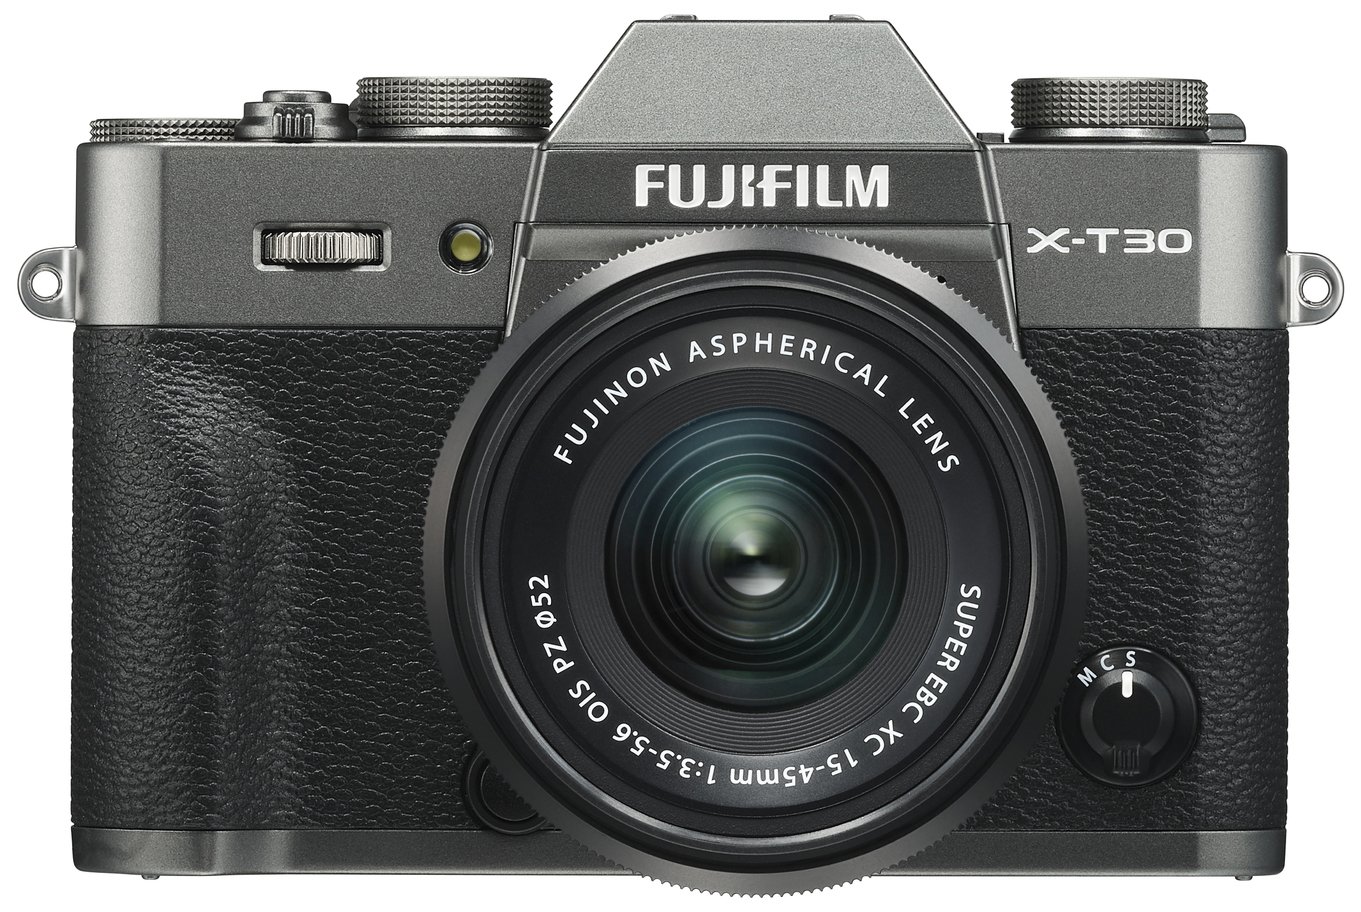 Fujifilm XT-30 Digital Camera with 15-45mm Lens Review